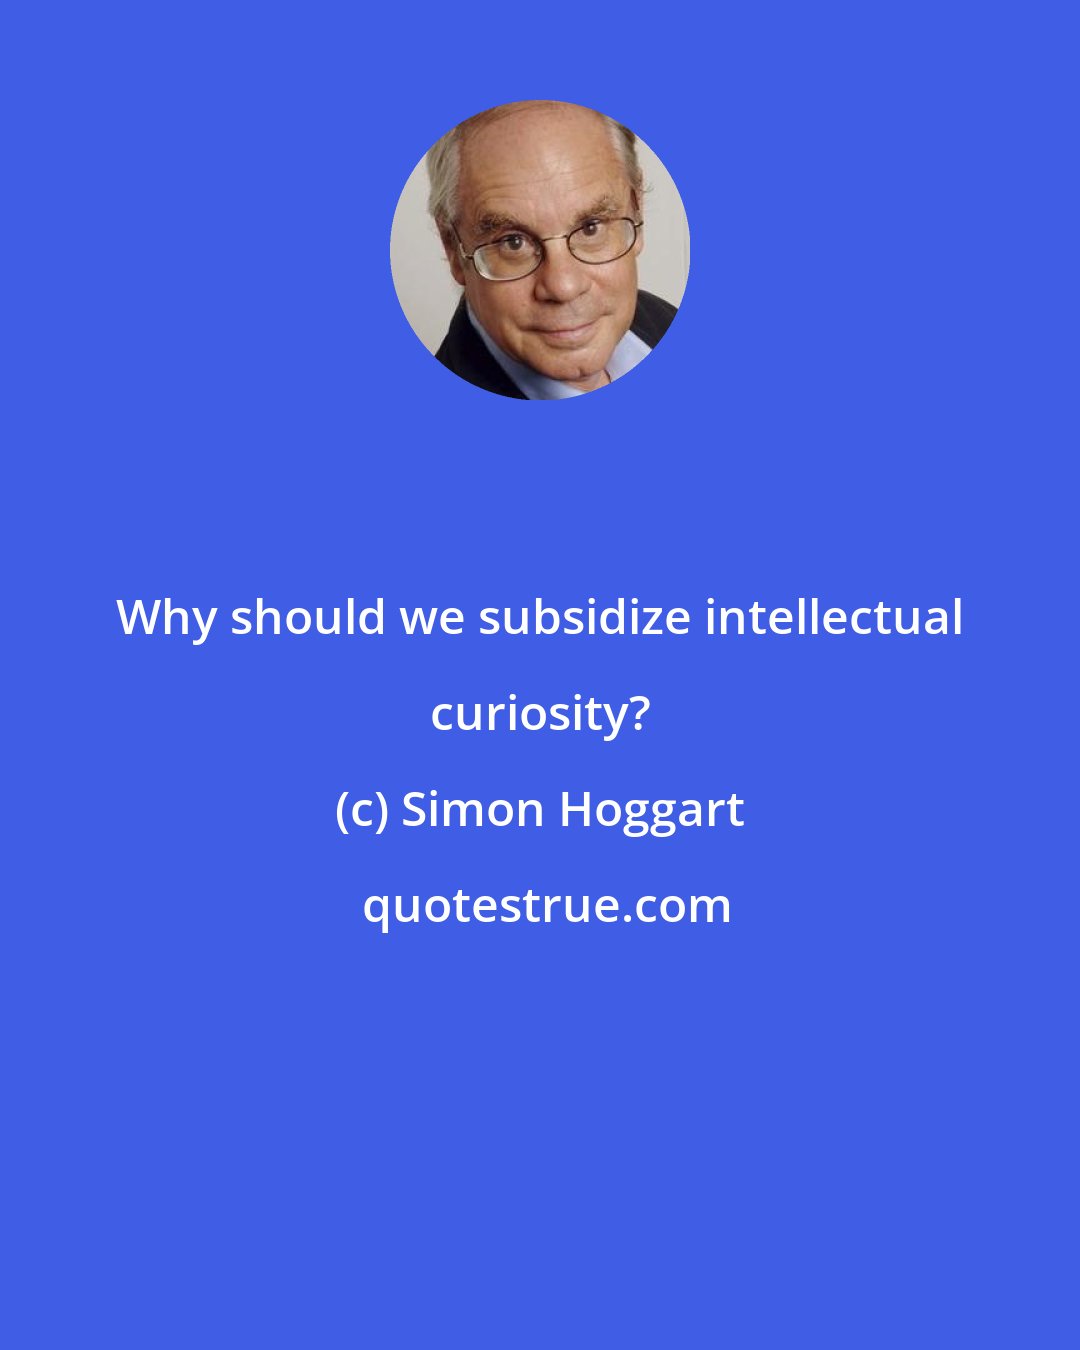 Simon Hoggart: Why should we subsidize intellectual curiosity?